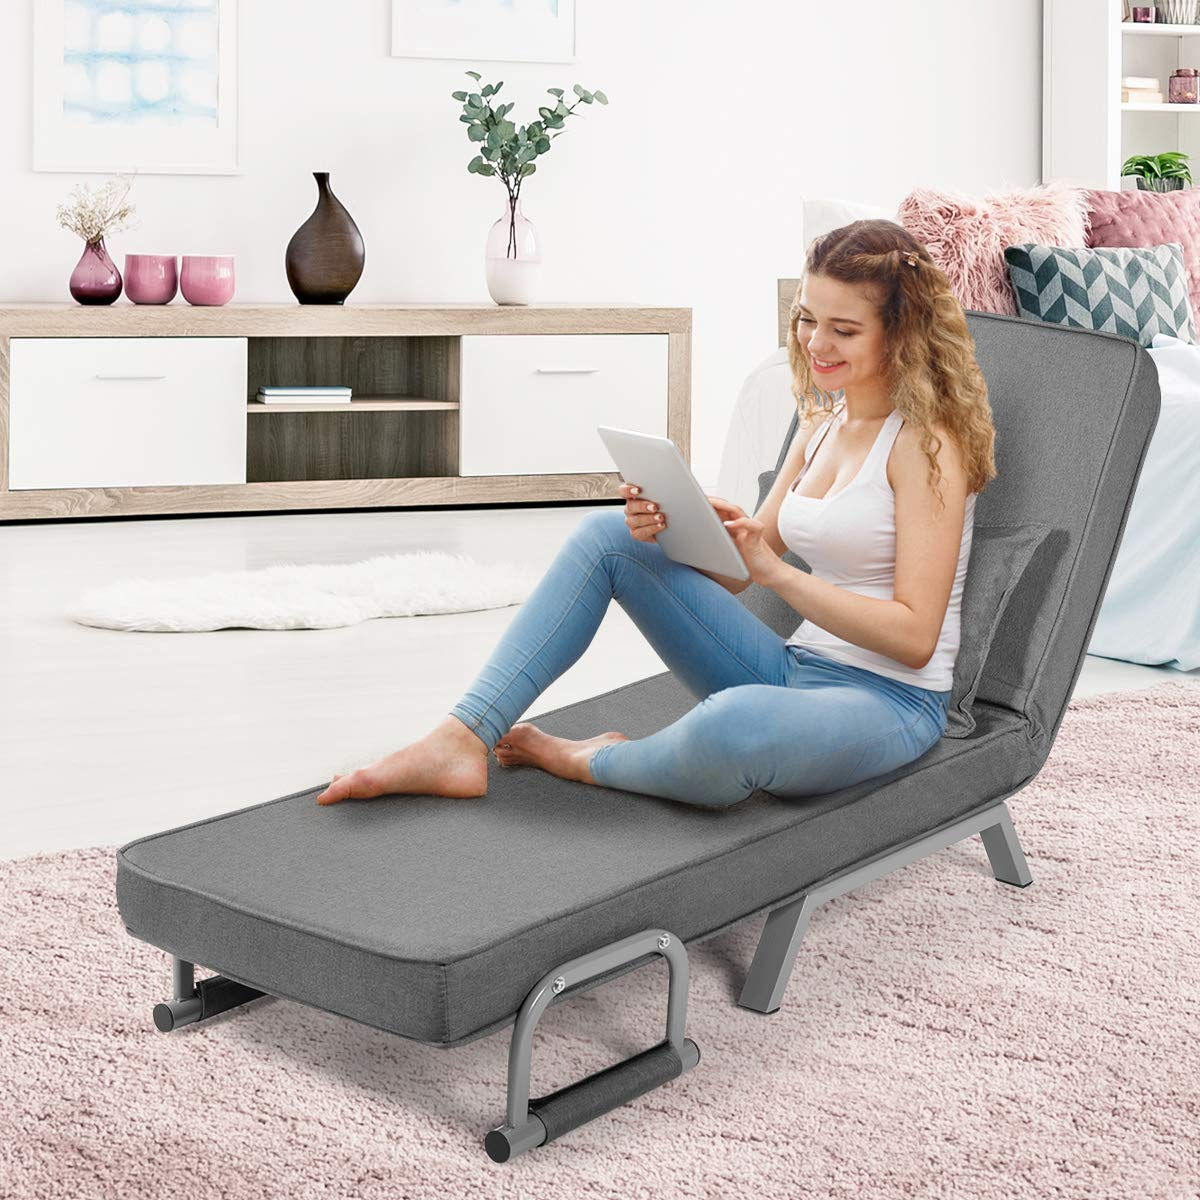 Giantex Convertible Sofa Bed Sleeper Chair